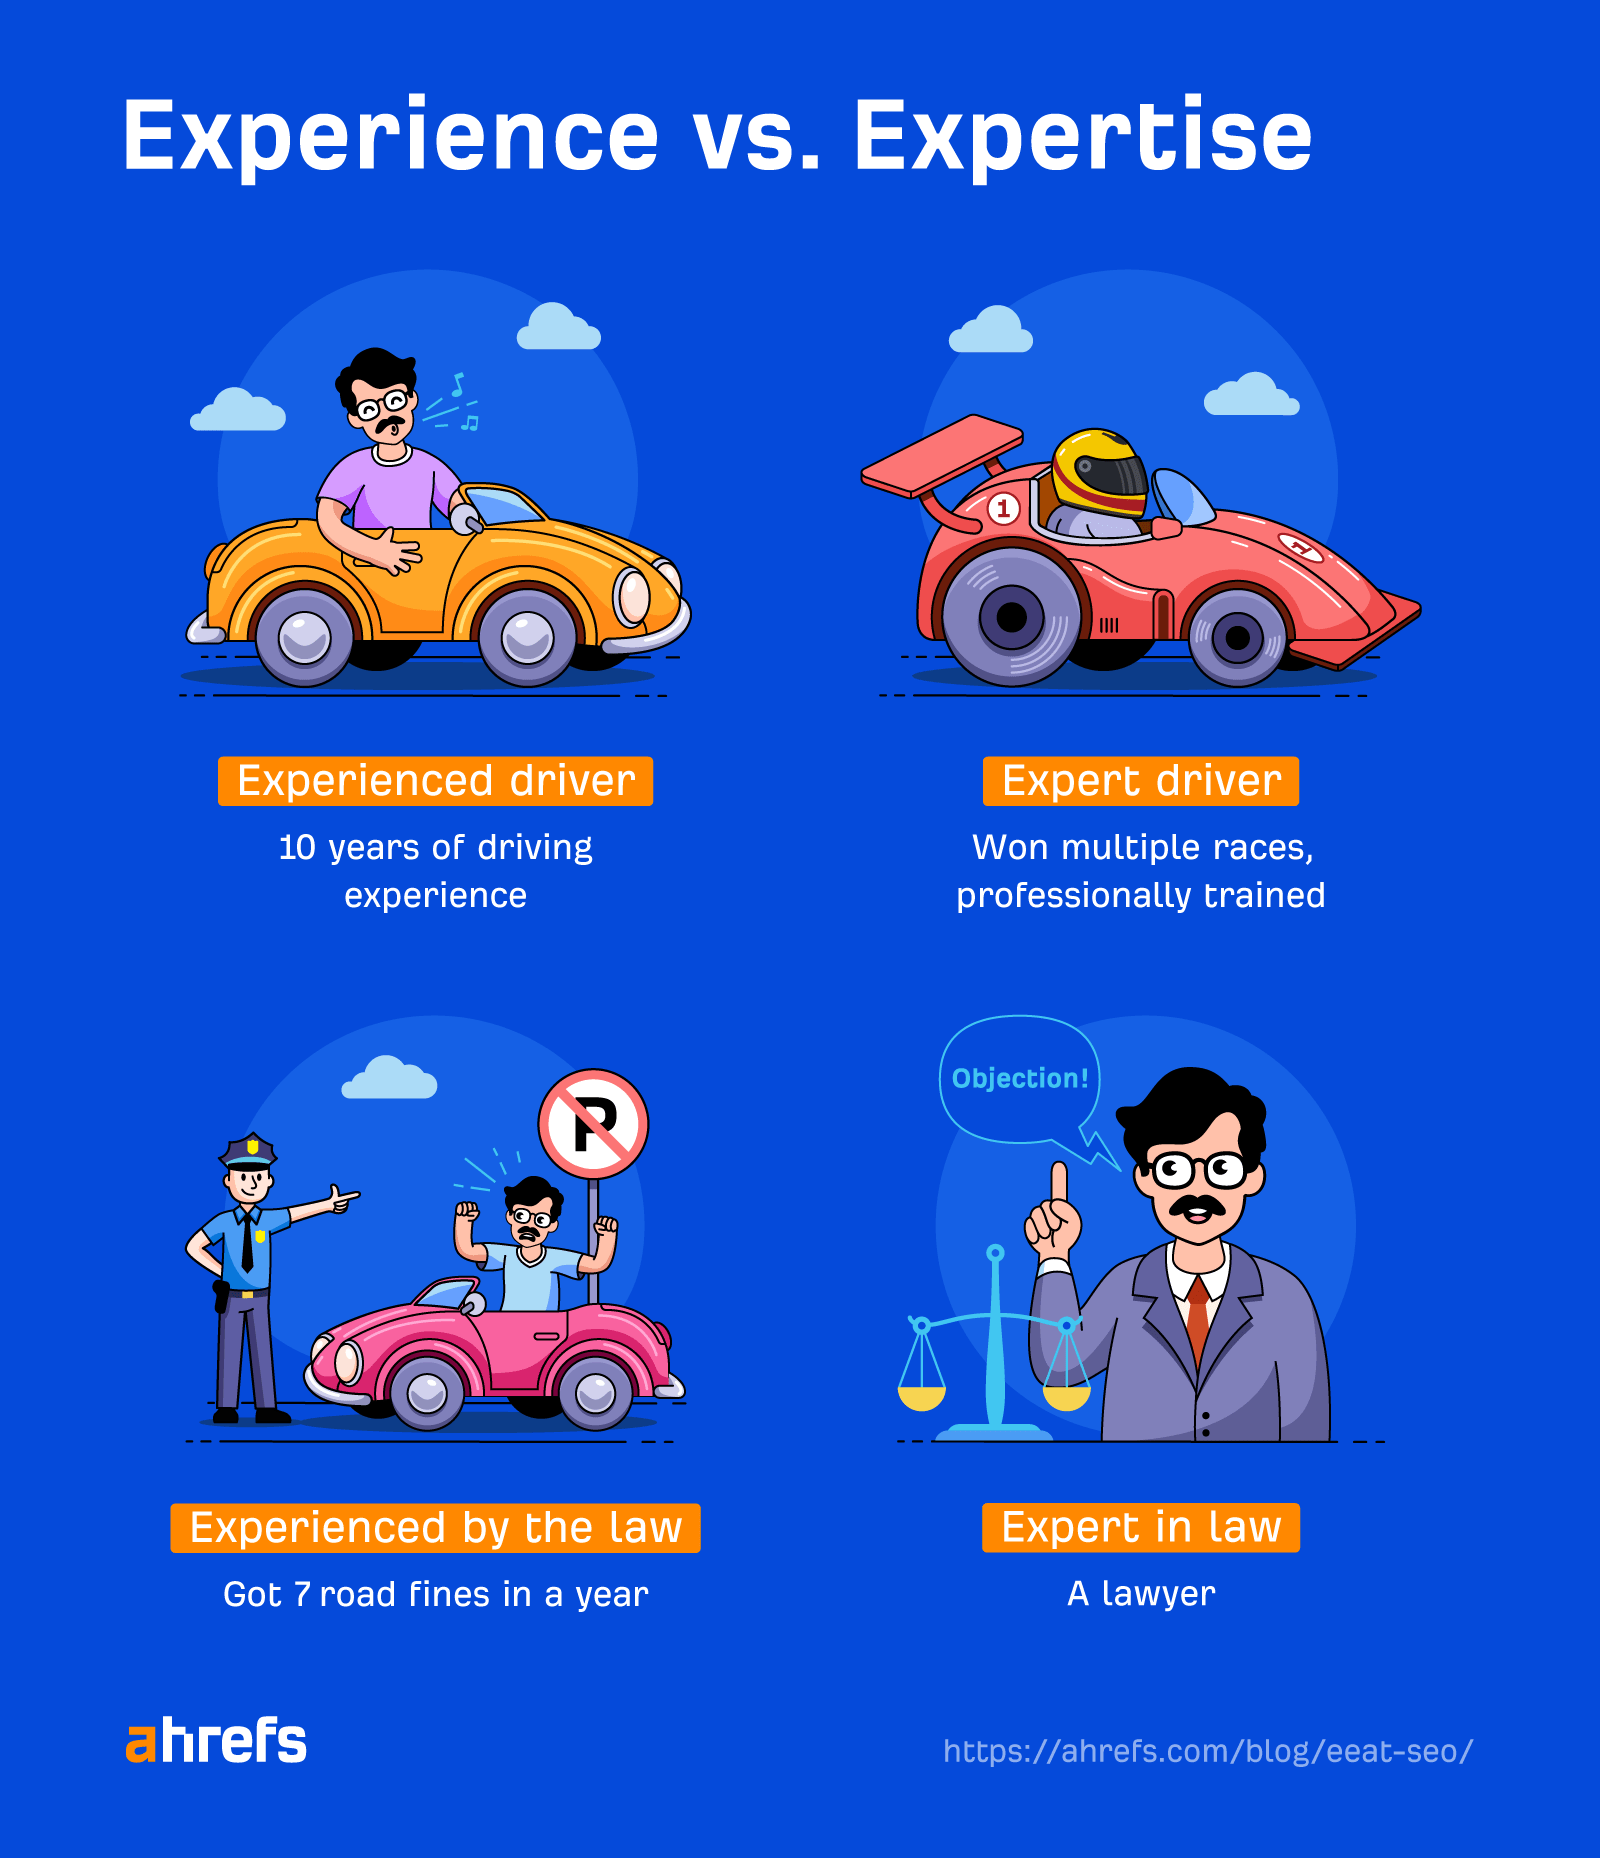 Experience versus expertise